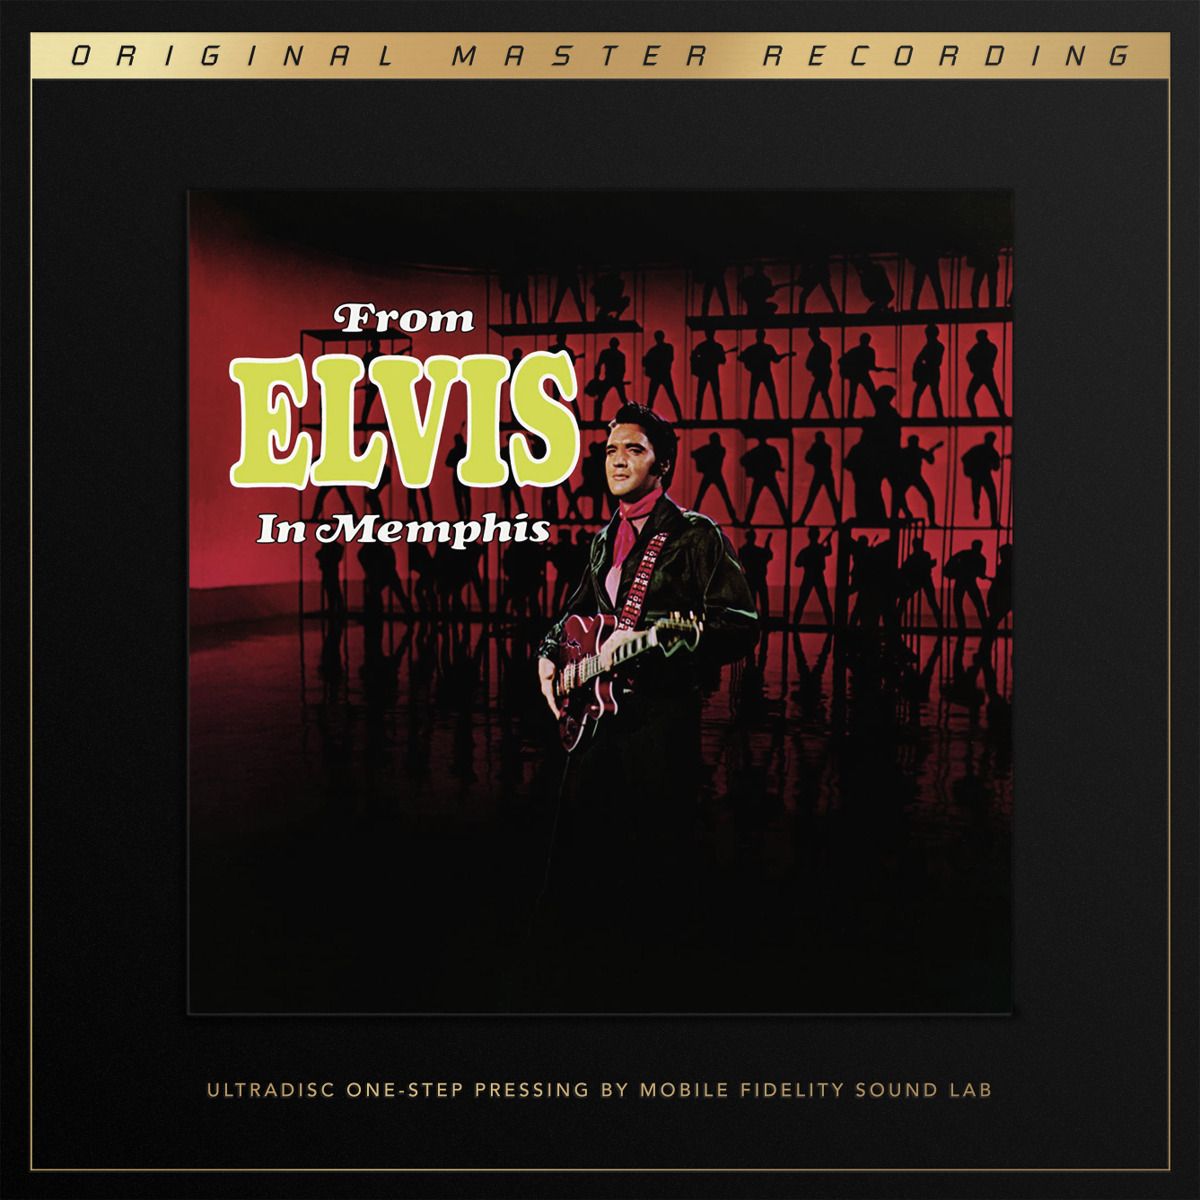 From Elvis in Memphis - one step Vinyl bei Audio Exclusive in wels